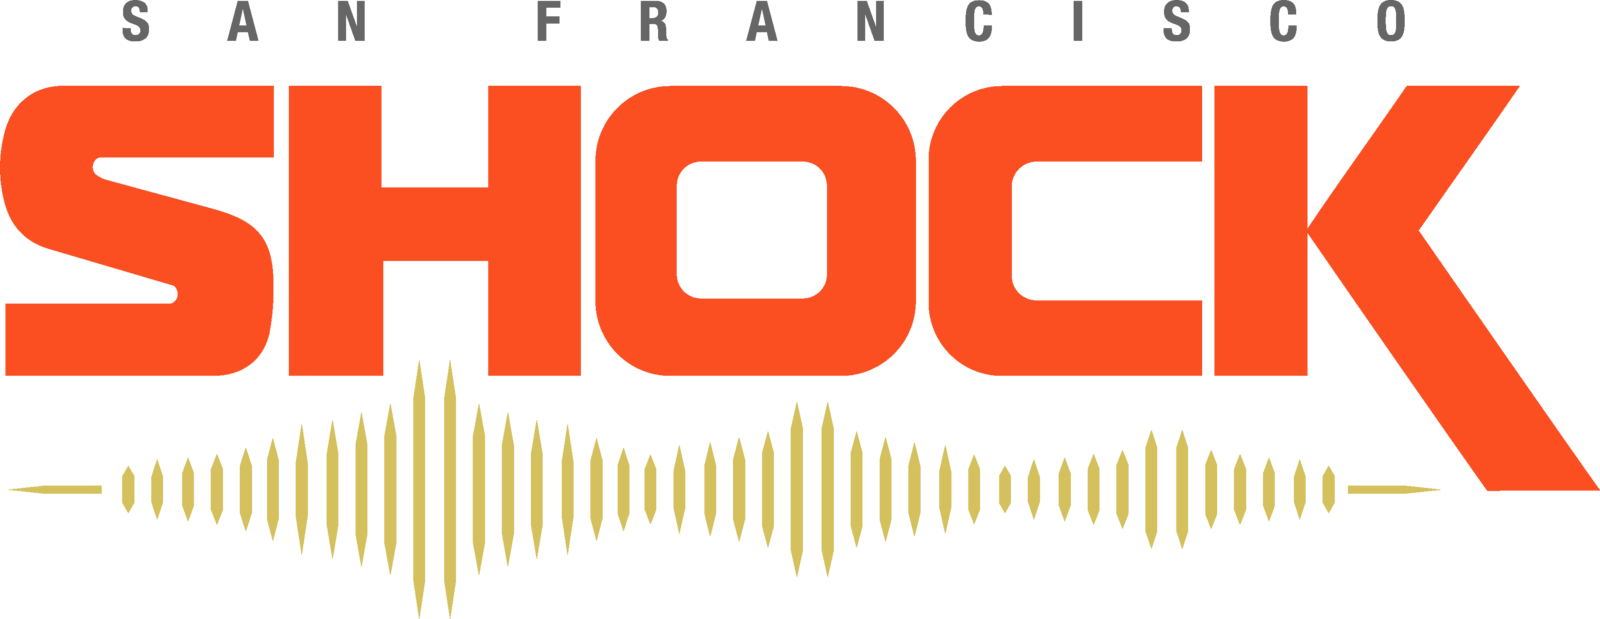 San Francisco Shock - San Francisco Shock Logo Png (600x232), Png Download